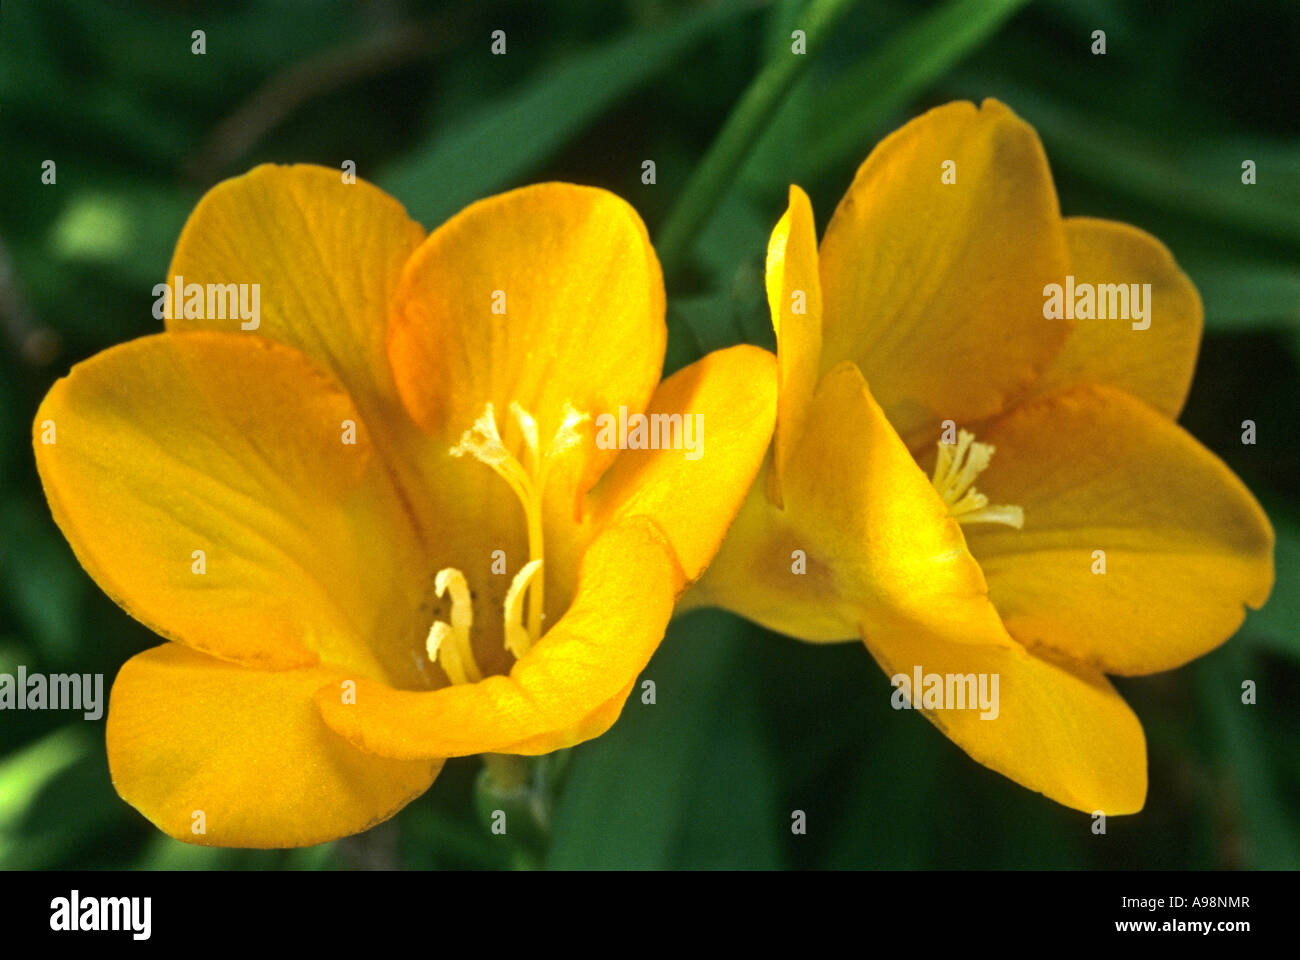 Freesia flower - yellow Fresia - Iridaceae close up Stock Photo - Alamy